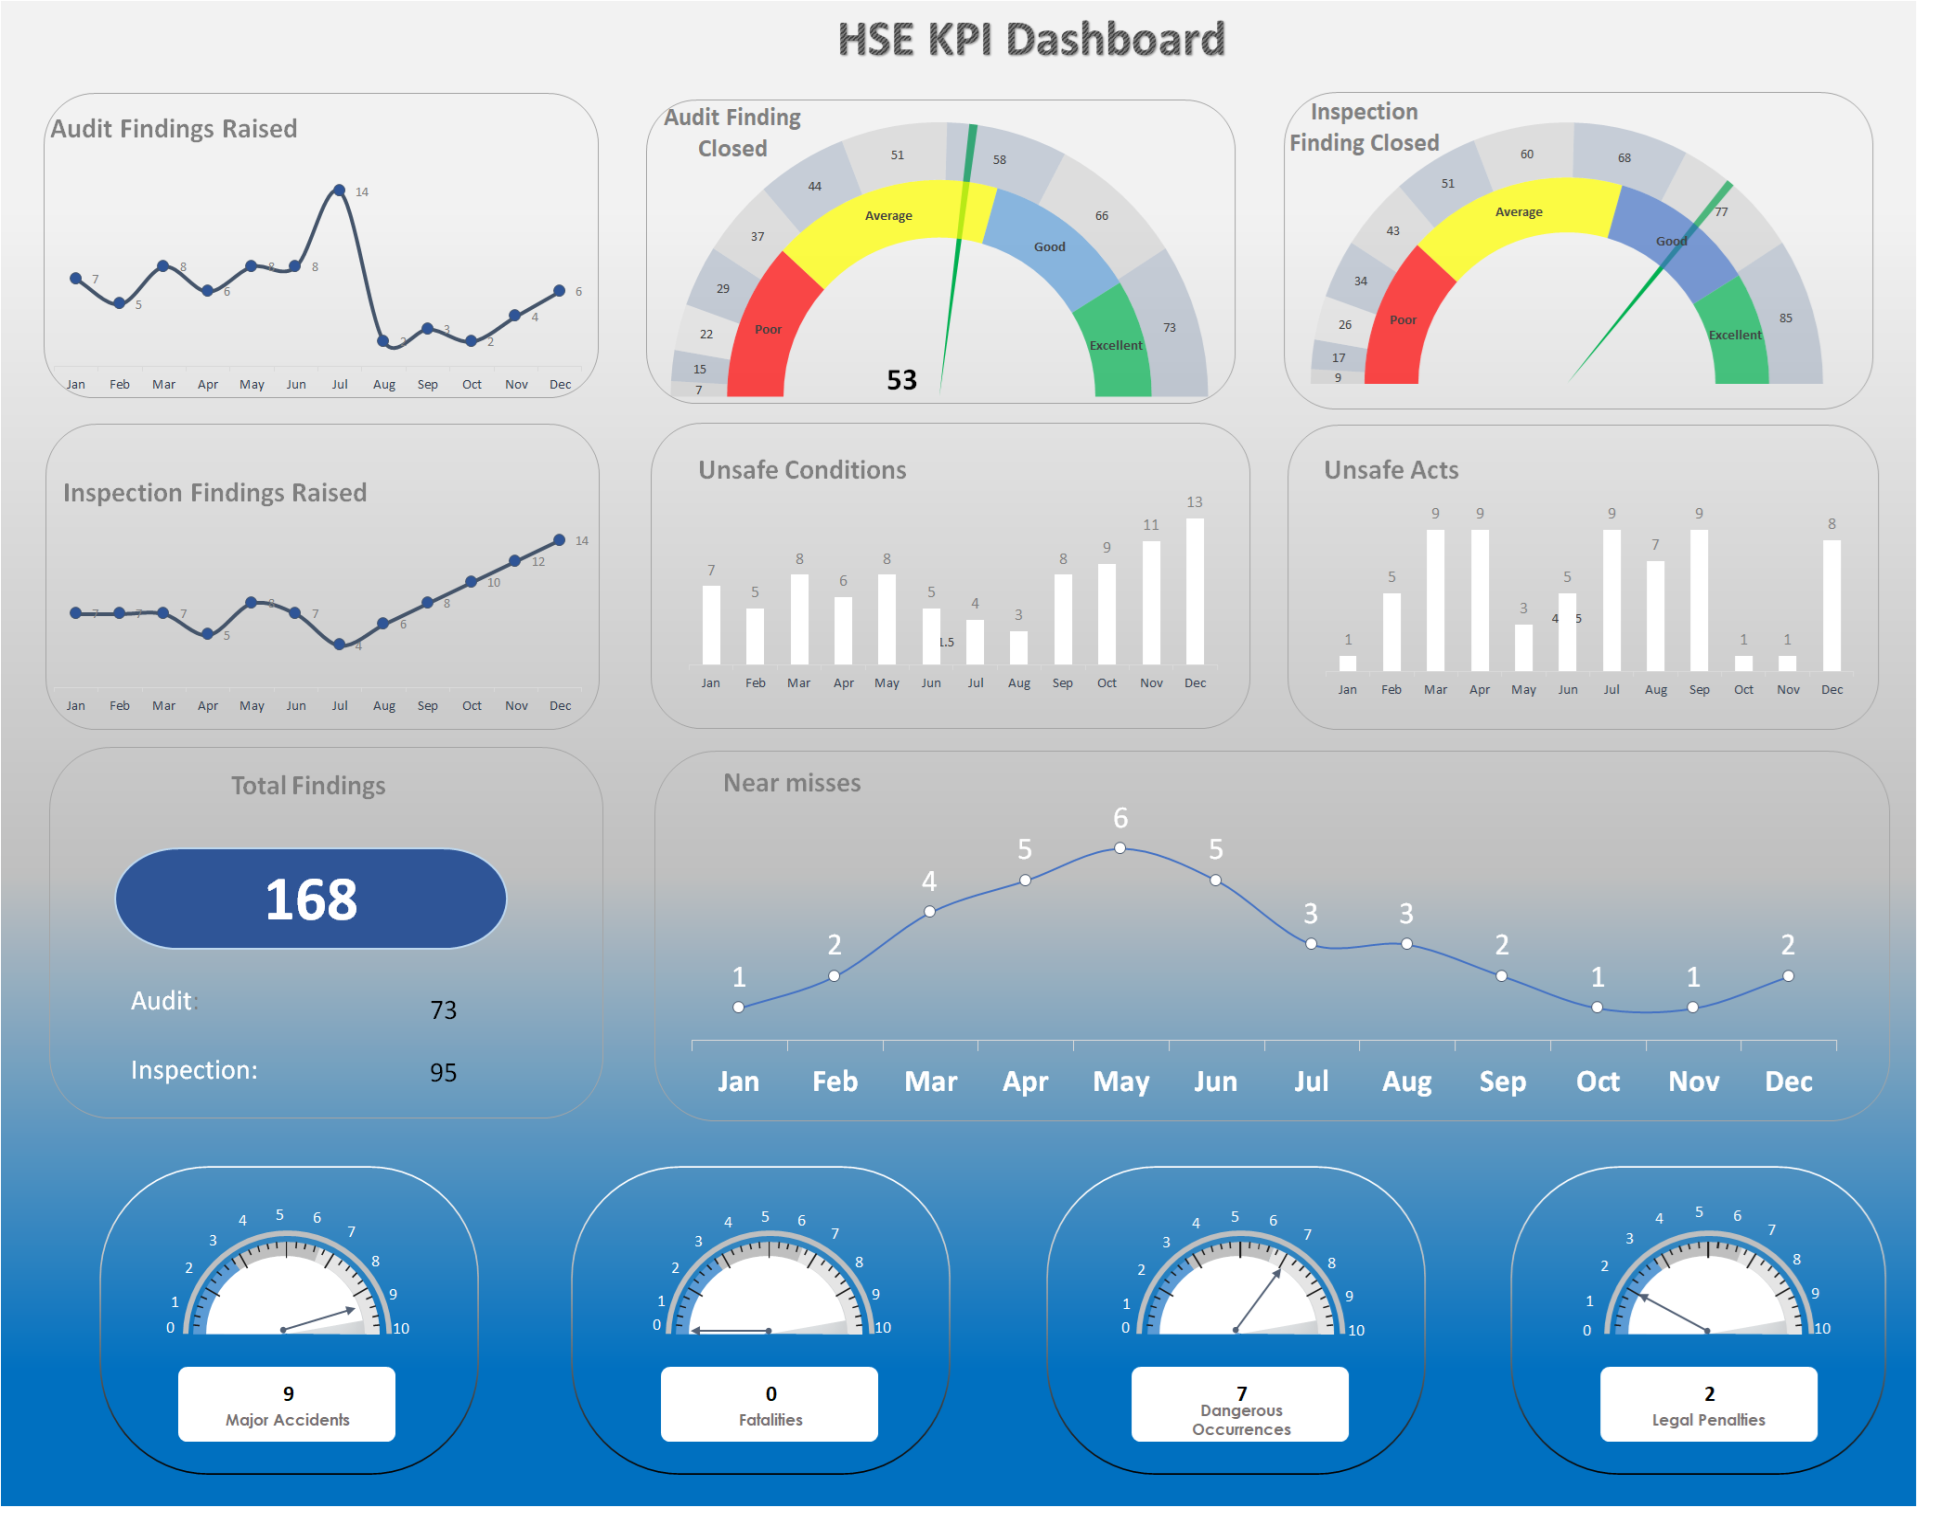 HSE KPI Dashboard V13.0